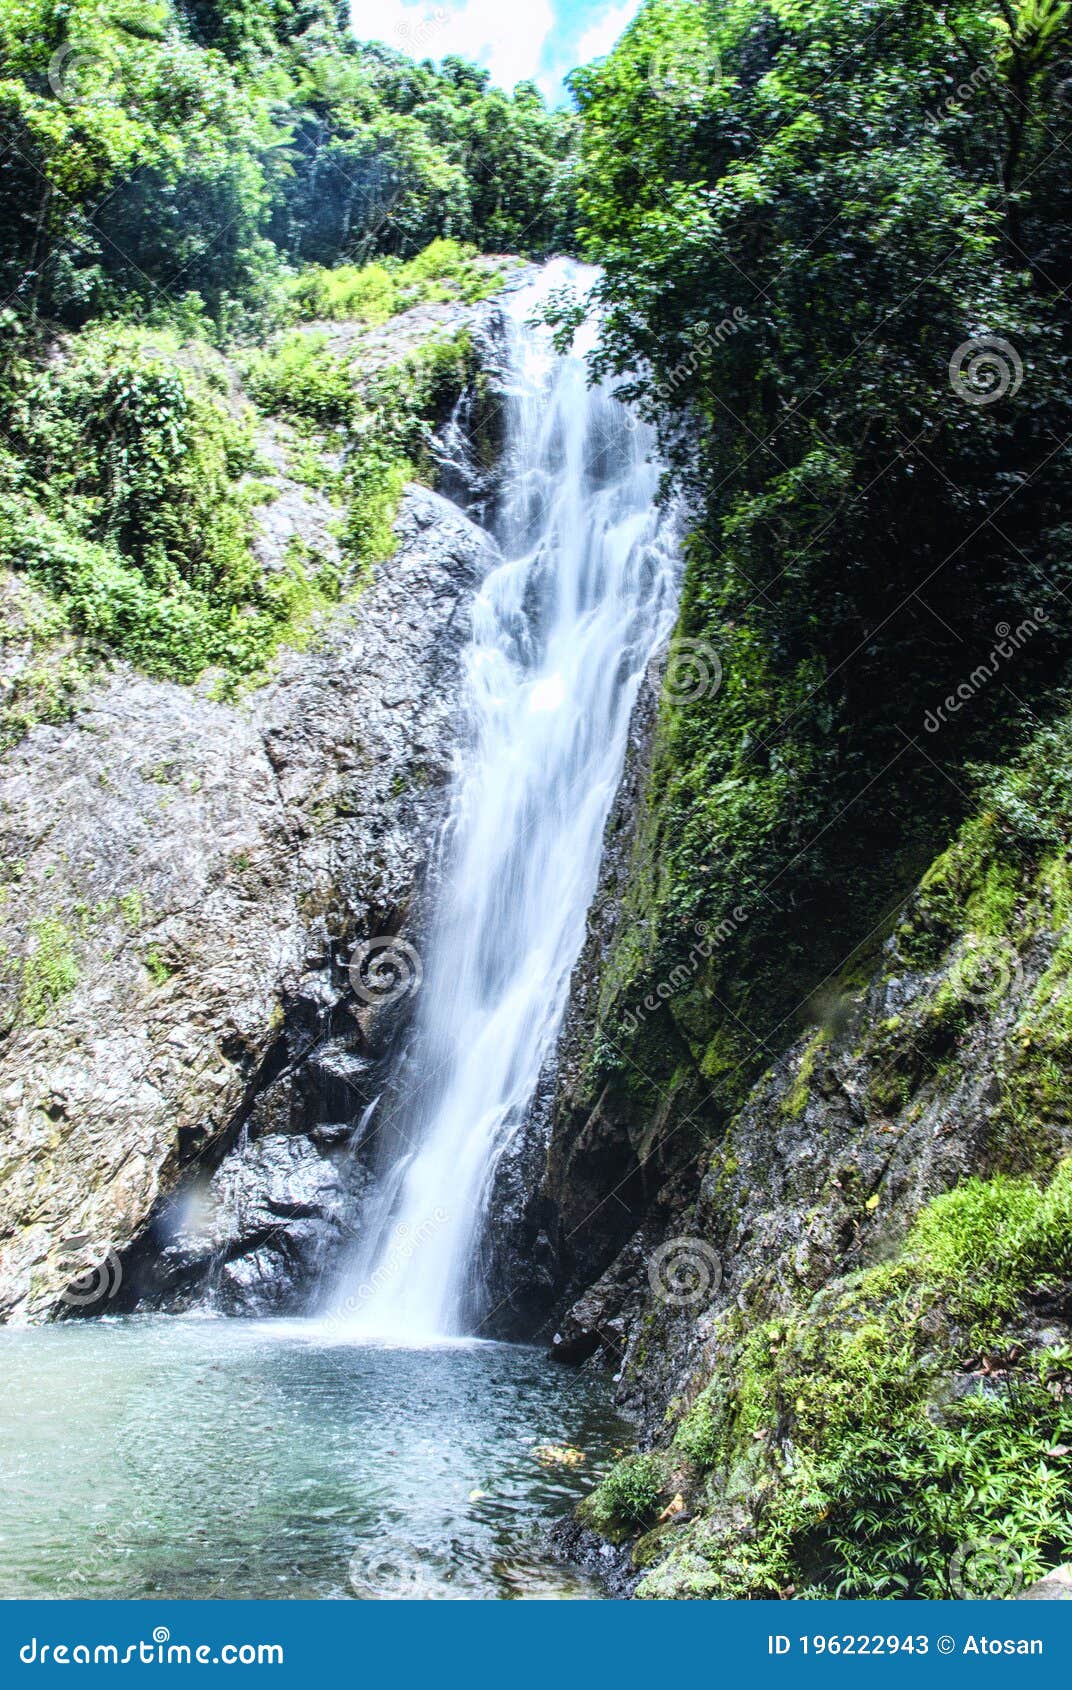 the biausevu waterfall